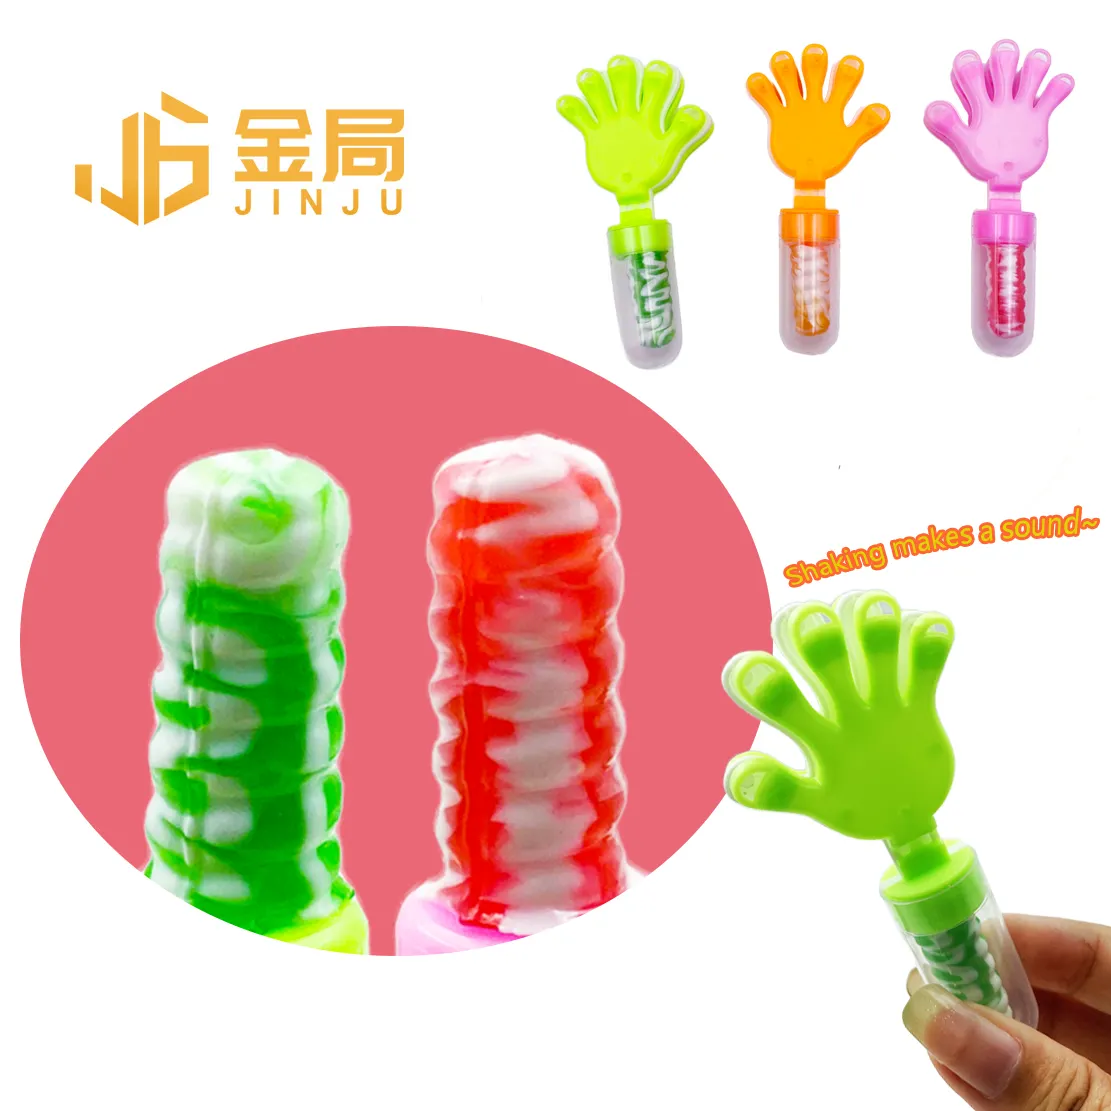 थोक चीन कैंडी प्लास्टिक बच्चों हाथ क्लैप कैंडी खिलौने नवीनता मीठे क्लैप हैंड लॉलीपॉप